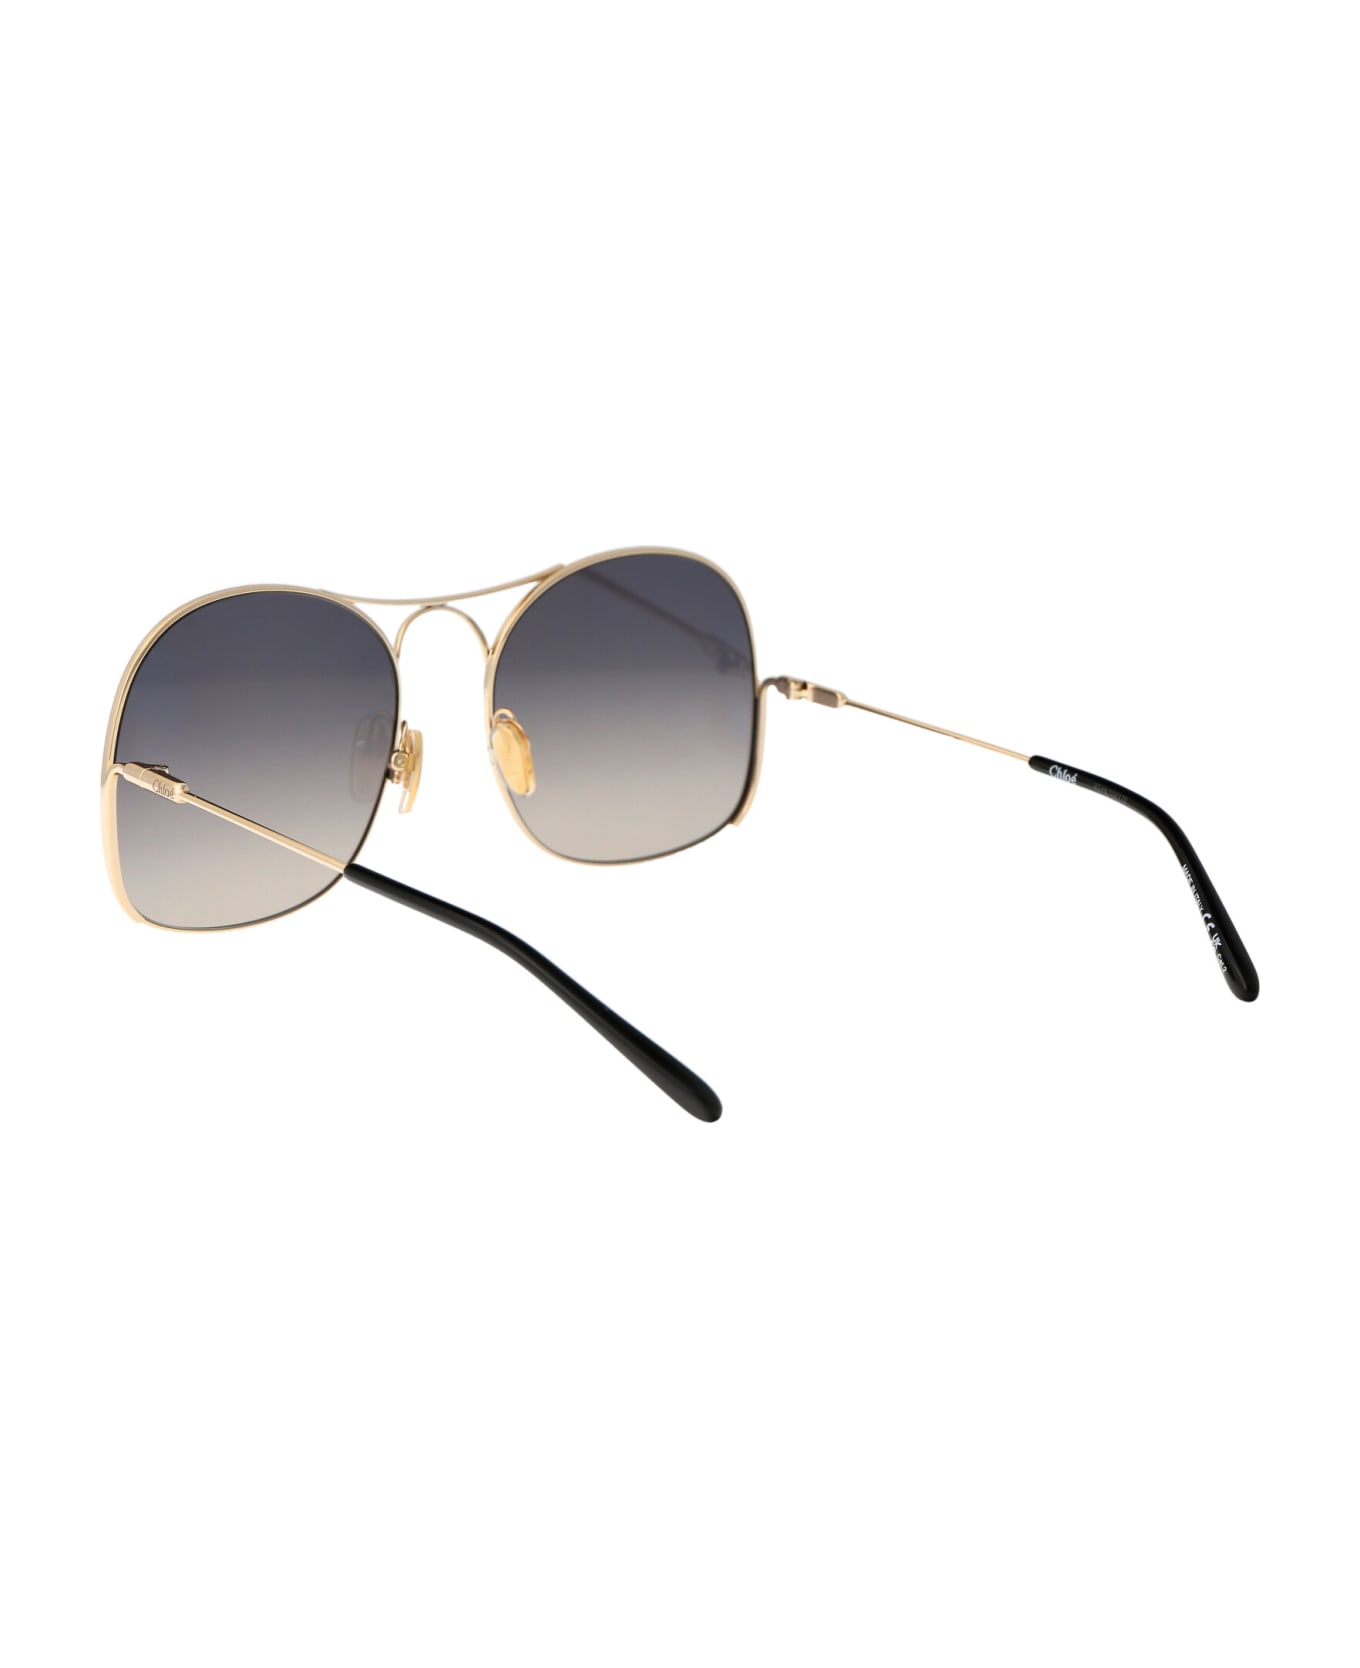 Chloé Eyewear Ch0164s Sunglasses - 001 GOLD GOLD GREY